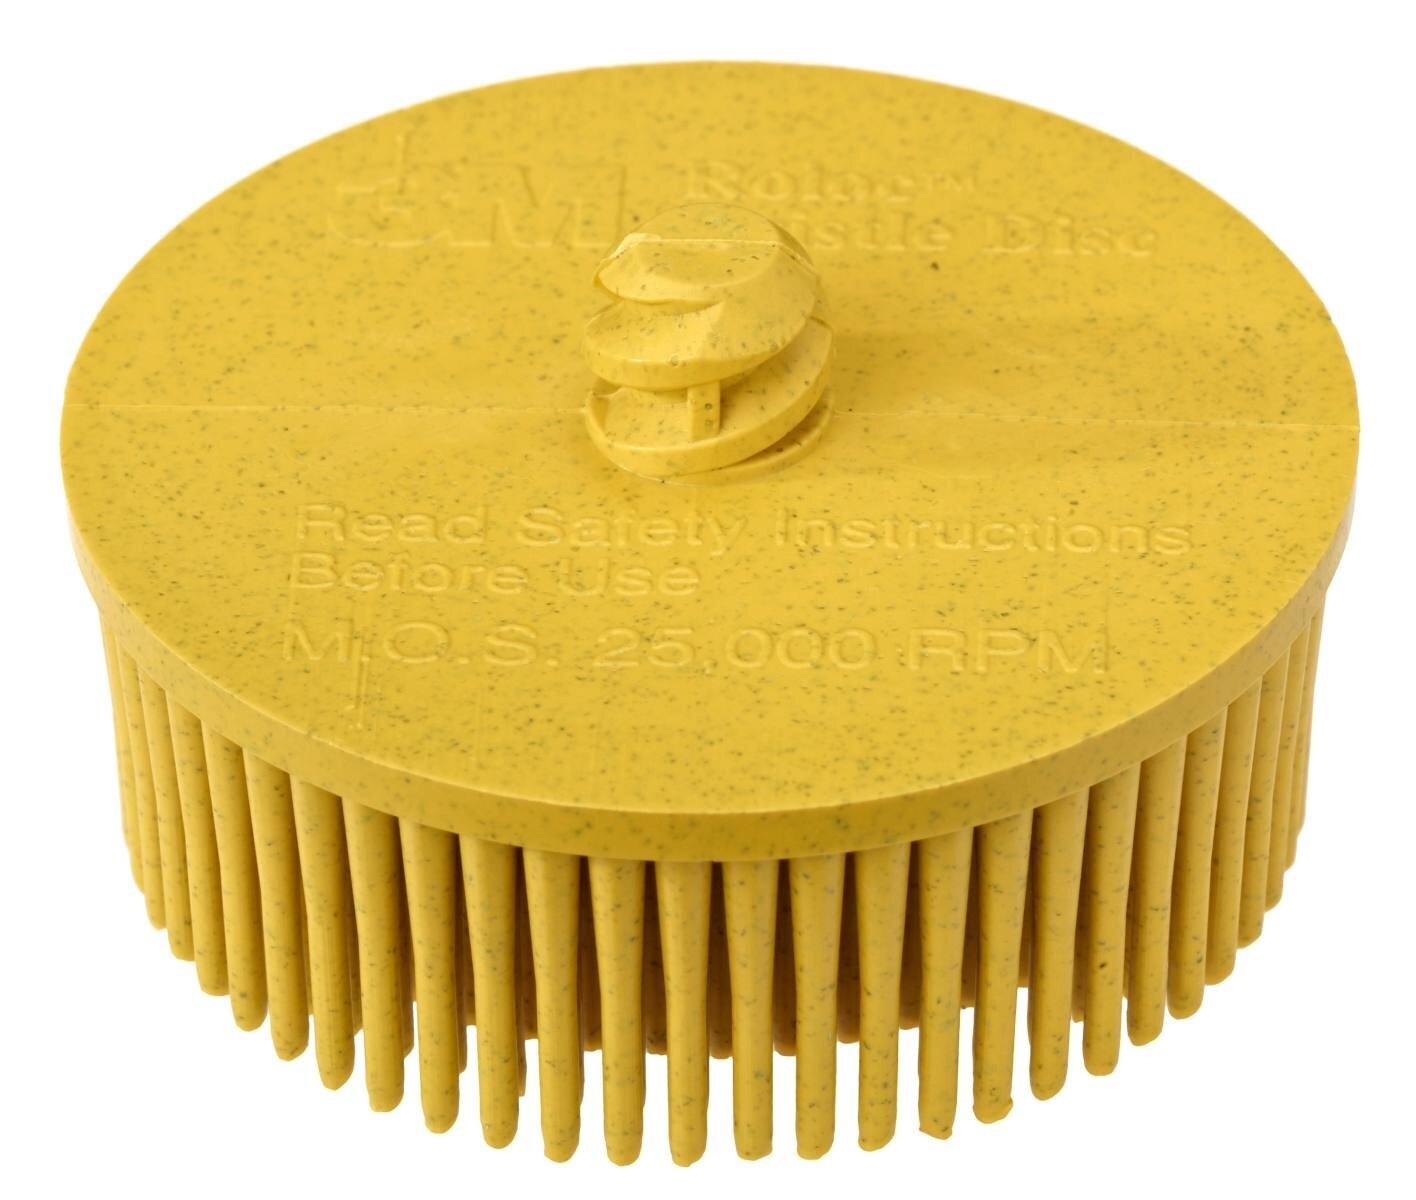 3M Scotch-Brite Roloc Bristle Disc RD-ZB, yellow, 50.8 mm, P80 #07525